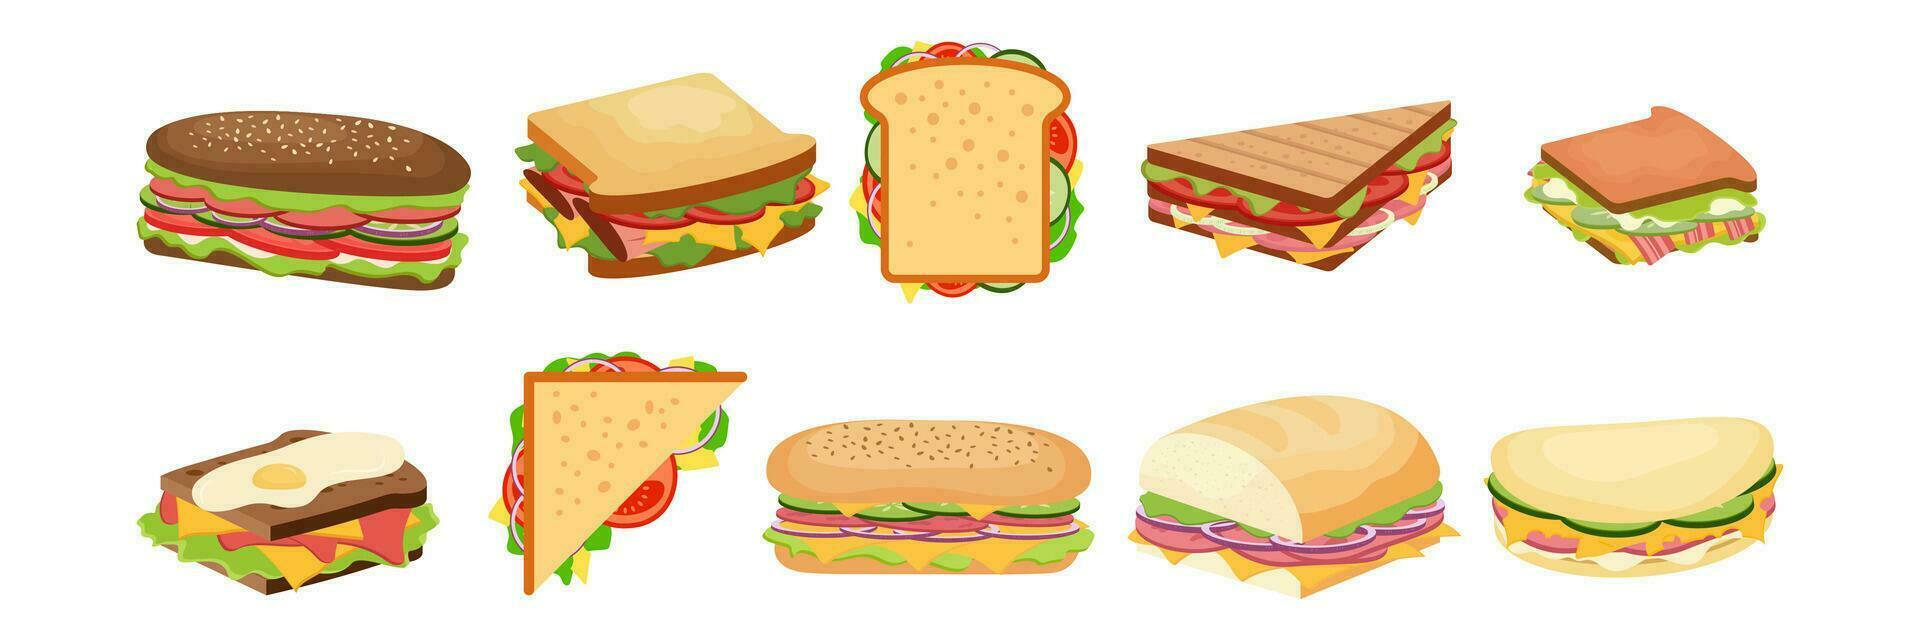 Burger, sandwich, hot dog and wrap Vector illustration set. Hamburger or cheeseburger snack fast food collections.